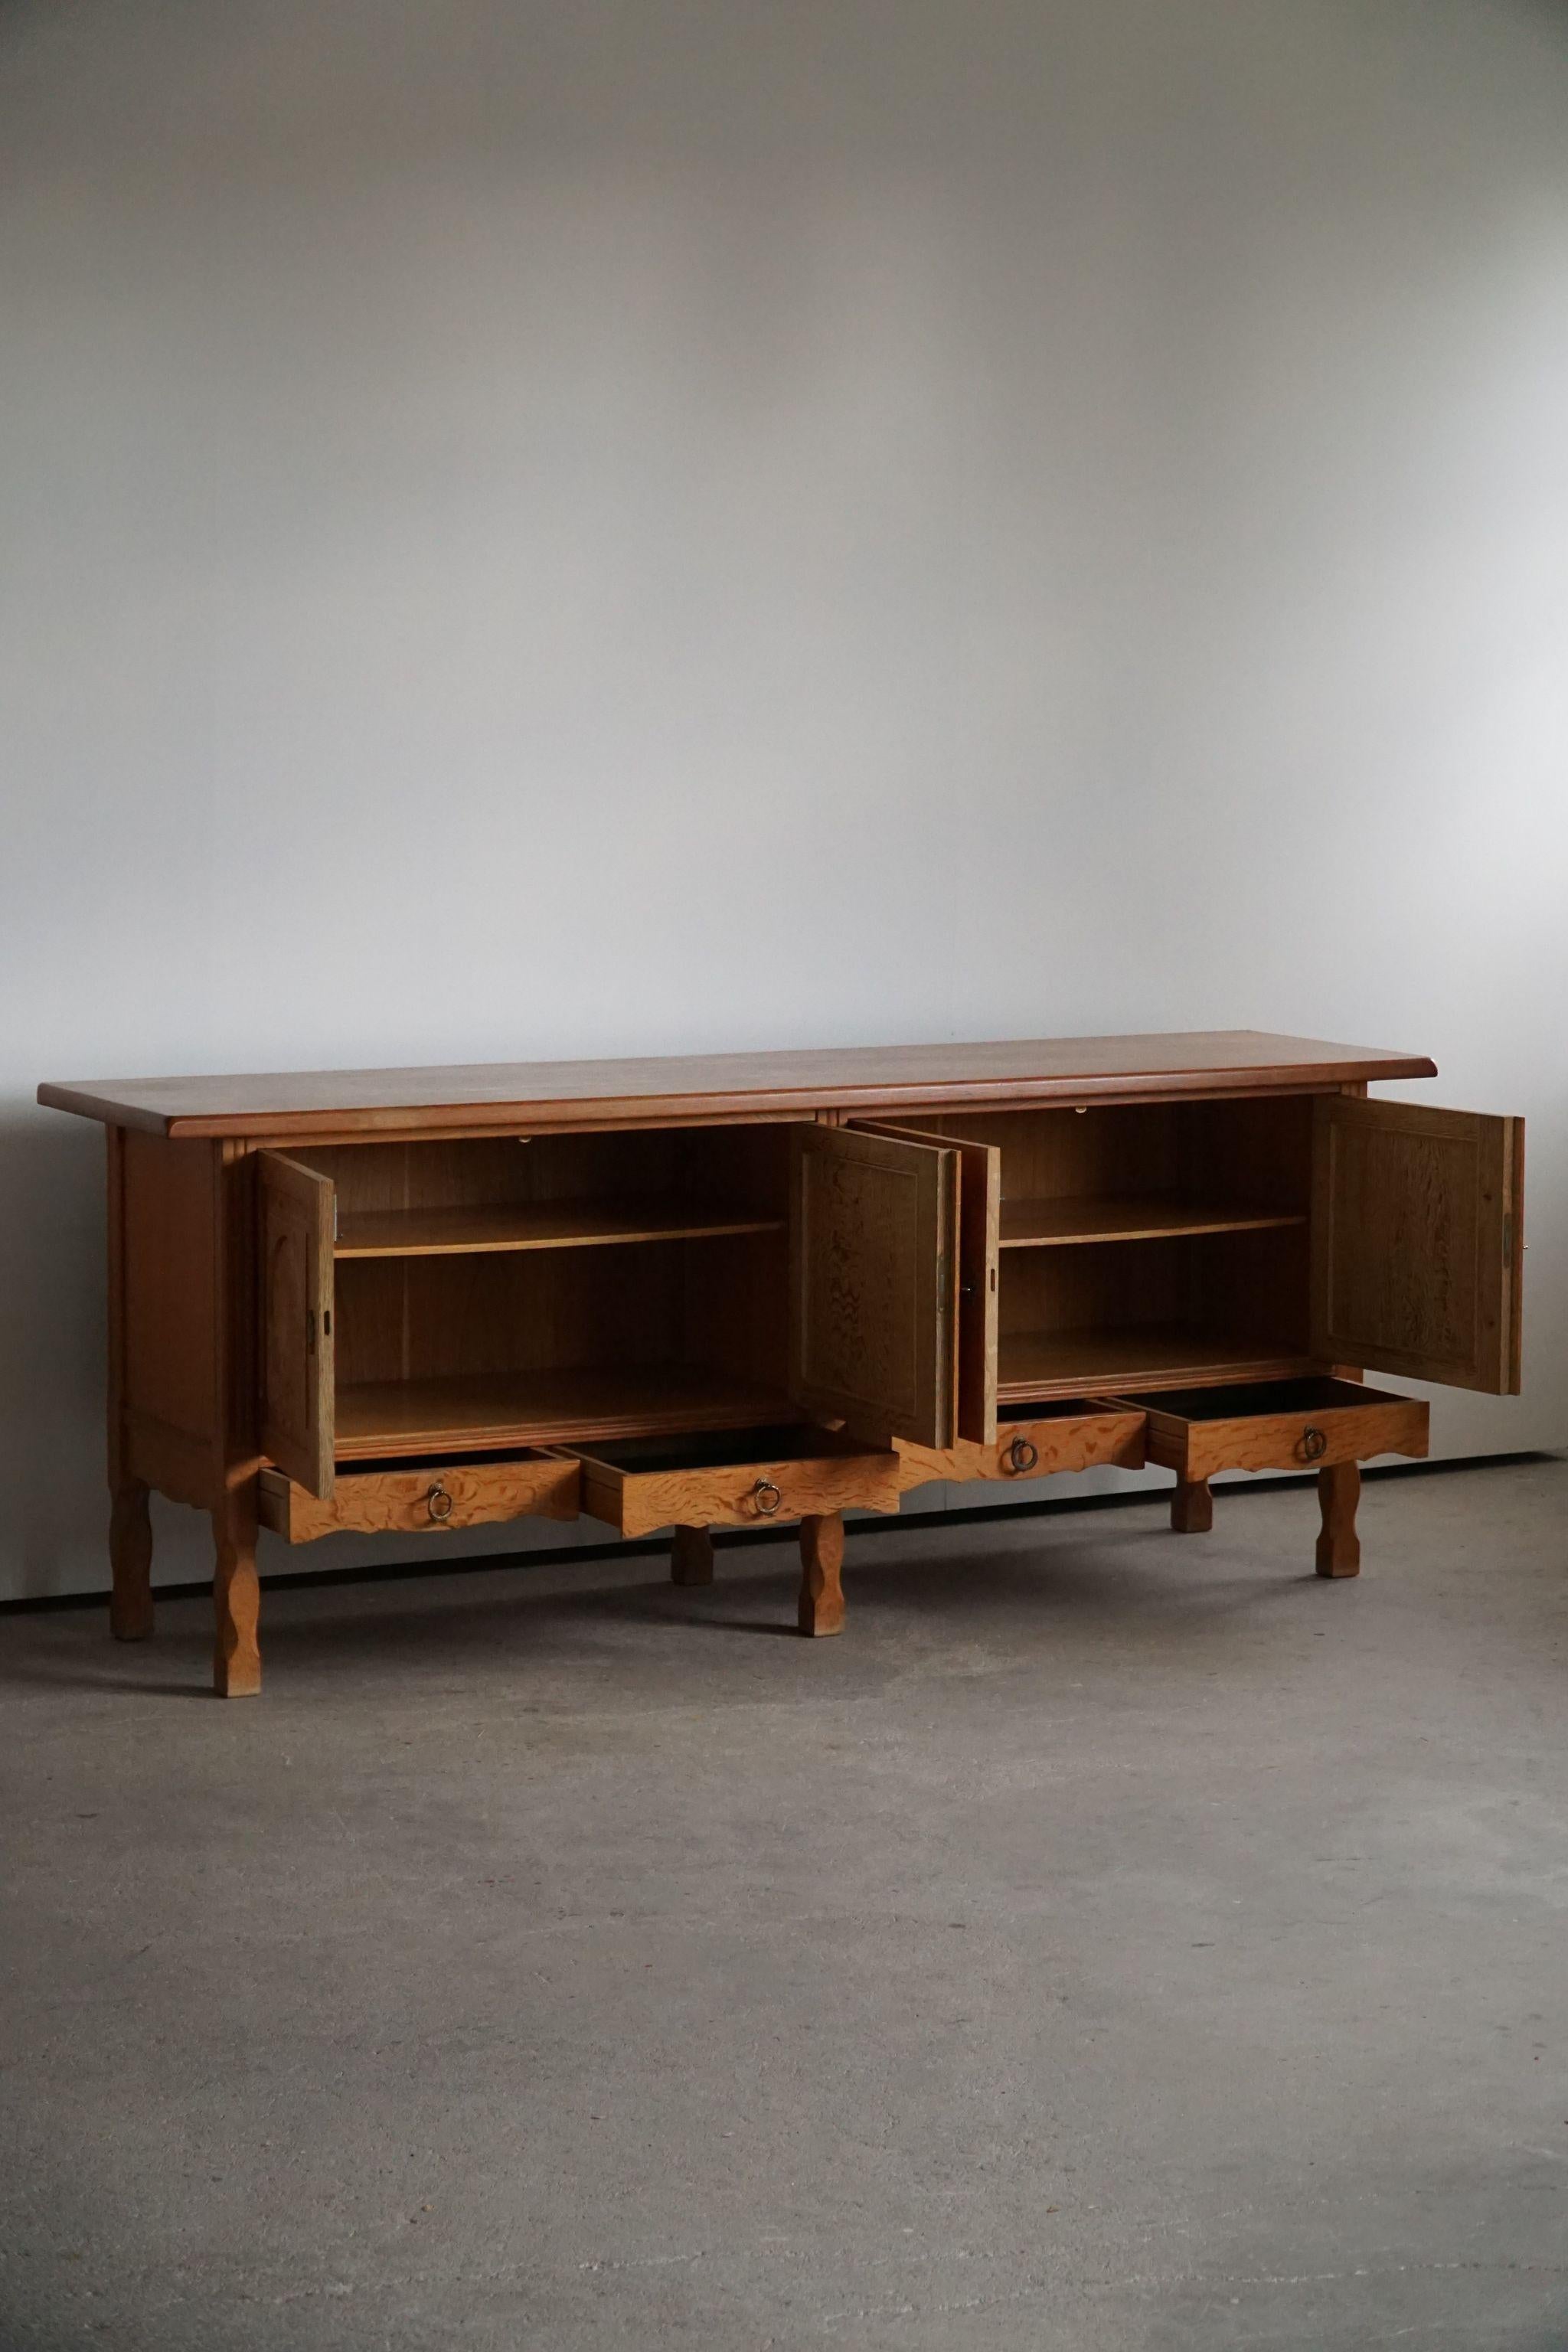 20th Century Mid Century Low Brutalist Sideboard in Oak, Danish Cabinetmaker, Made in 1960s